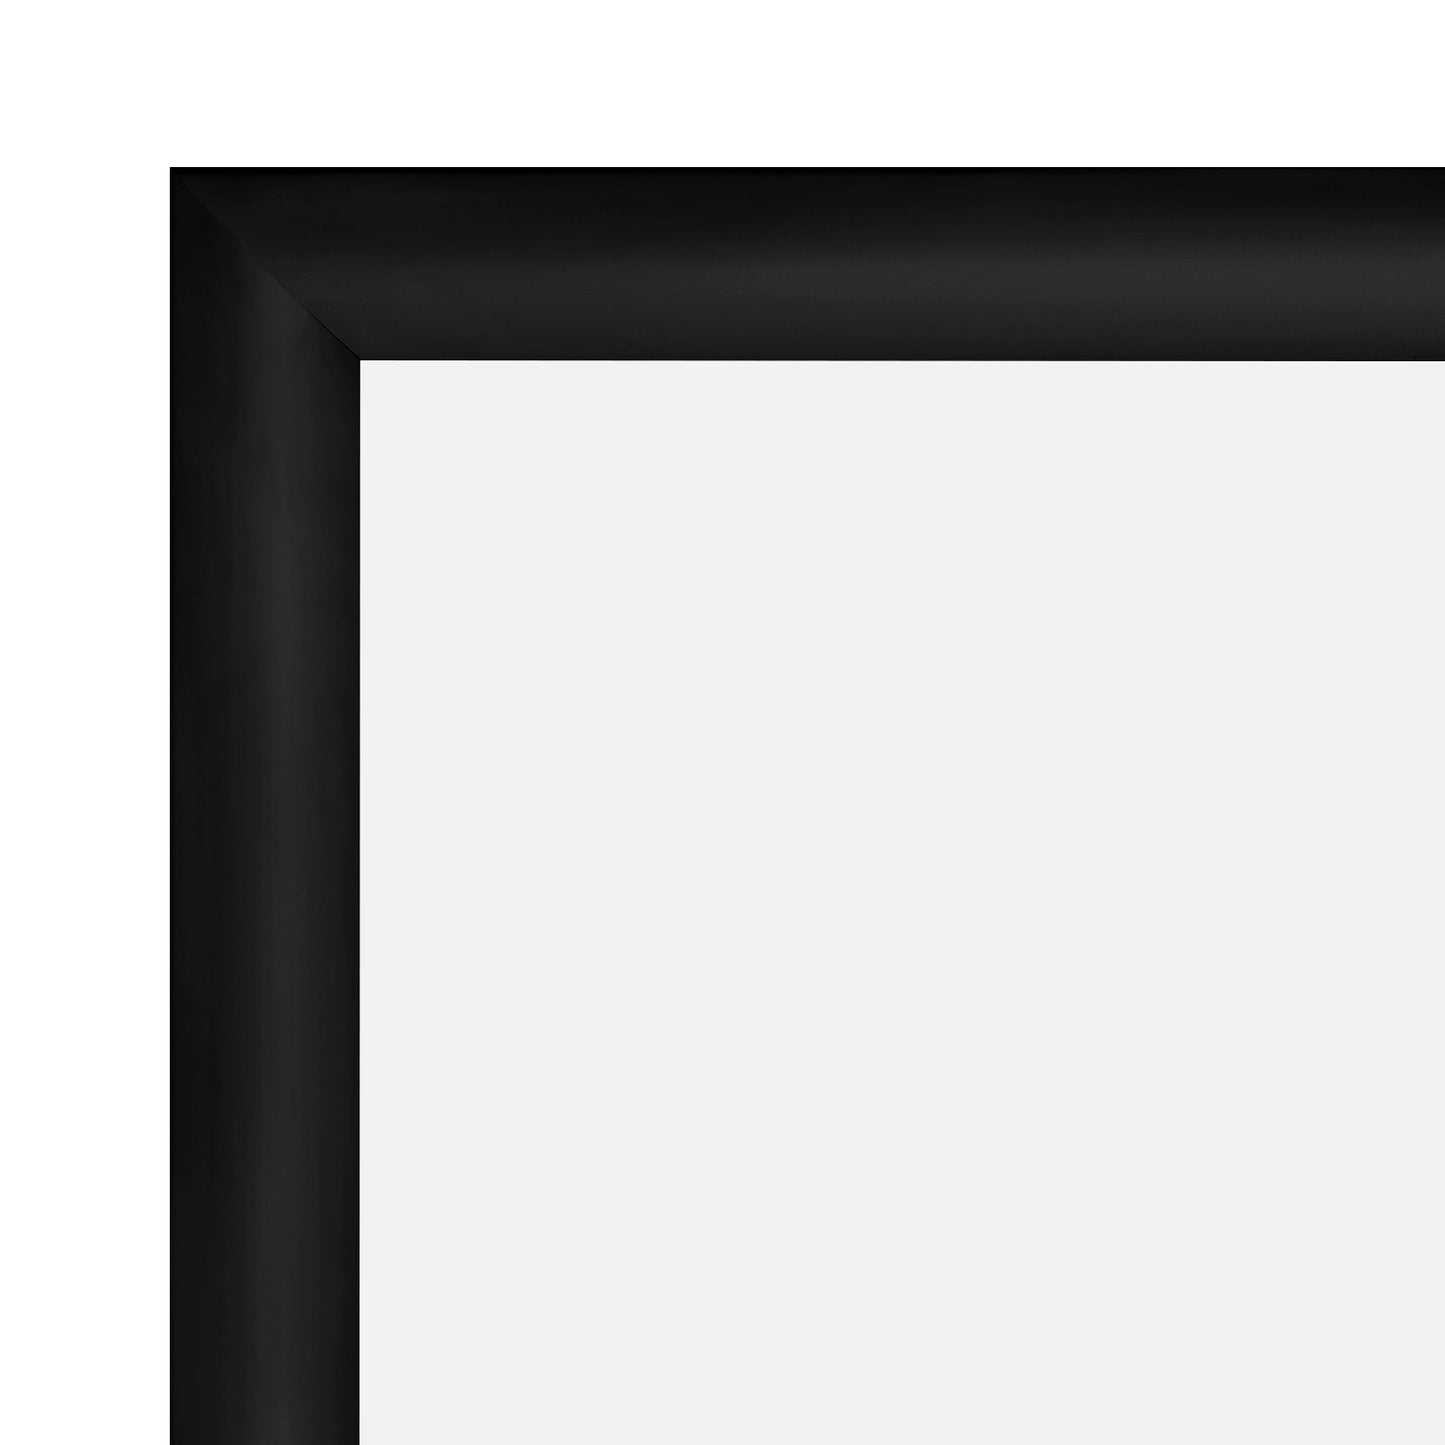 24x32 Black SnapeZo® Snap Frame - 1.2" Profile - Snap Frames Direct